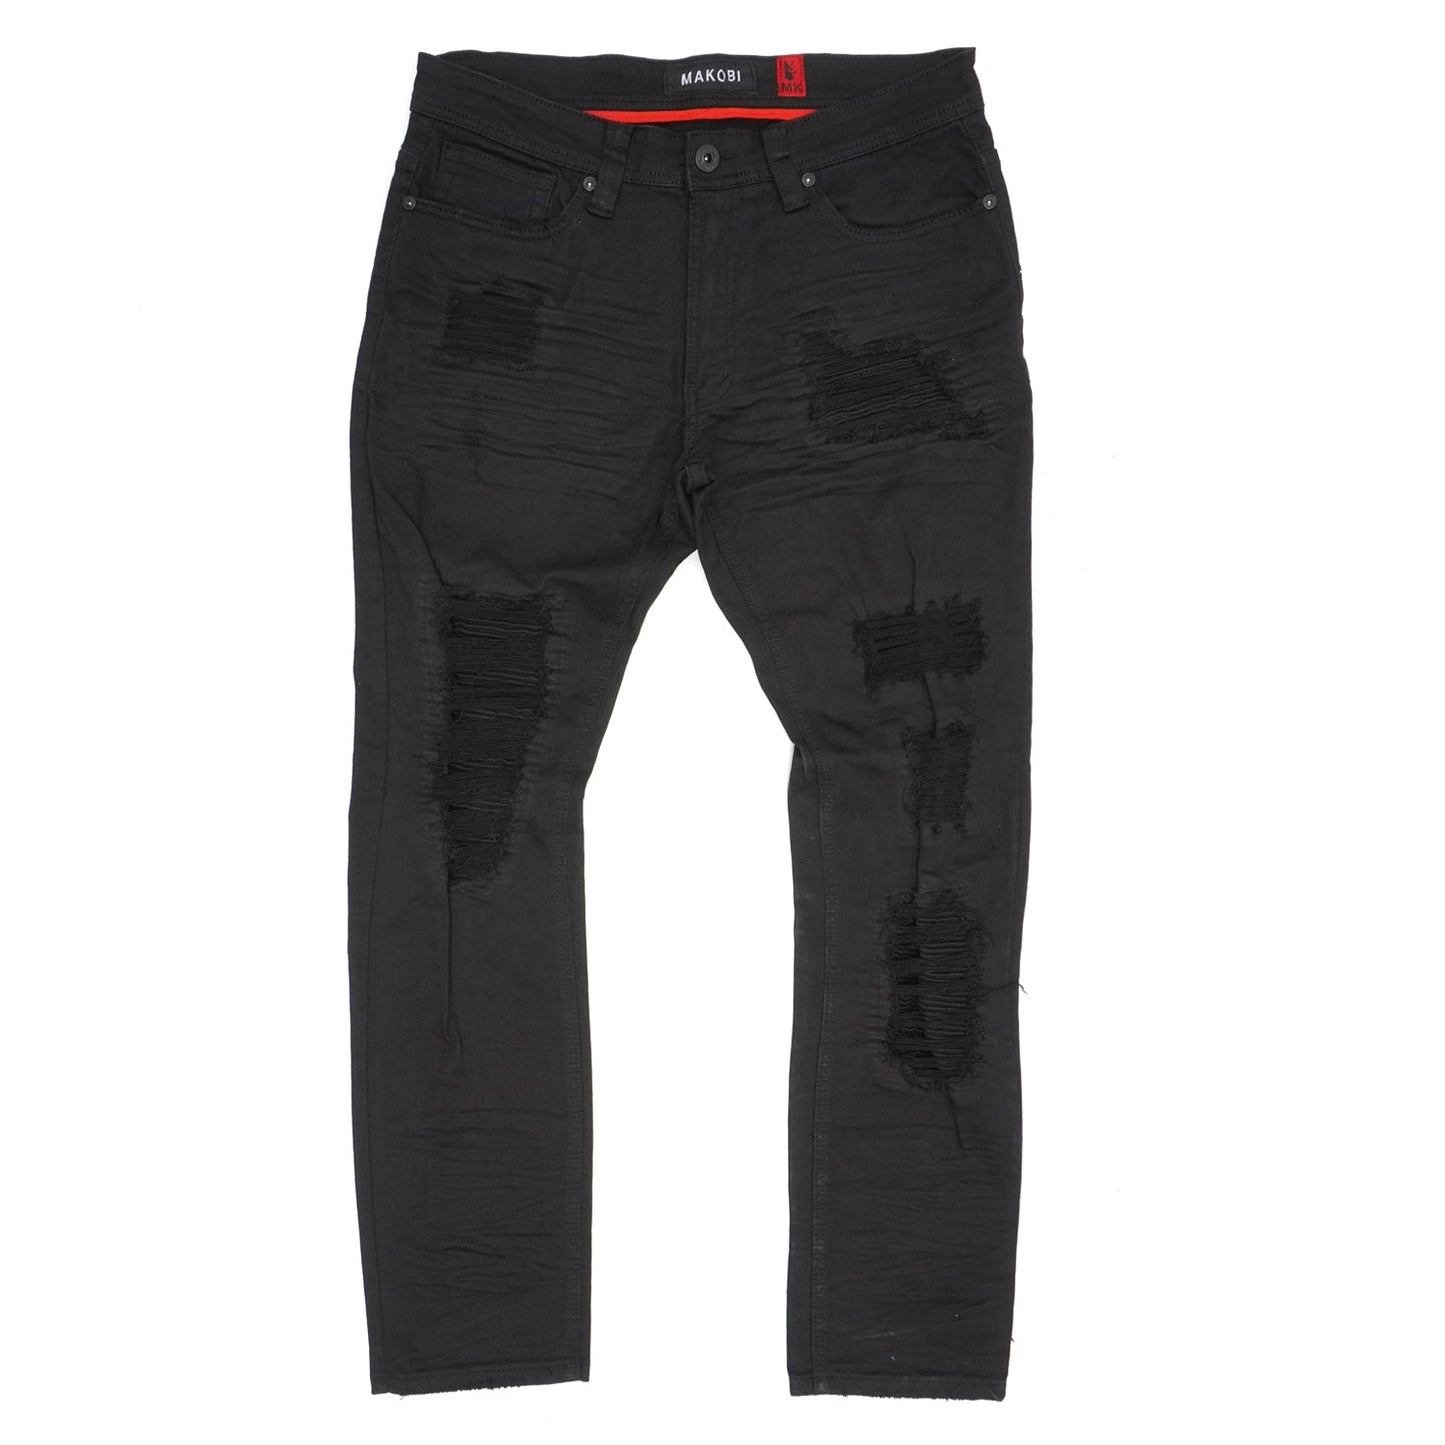 M1780 Makobi Pensacola Shredded Jeans -Black/Black